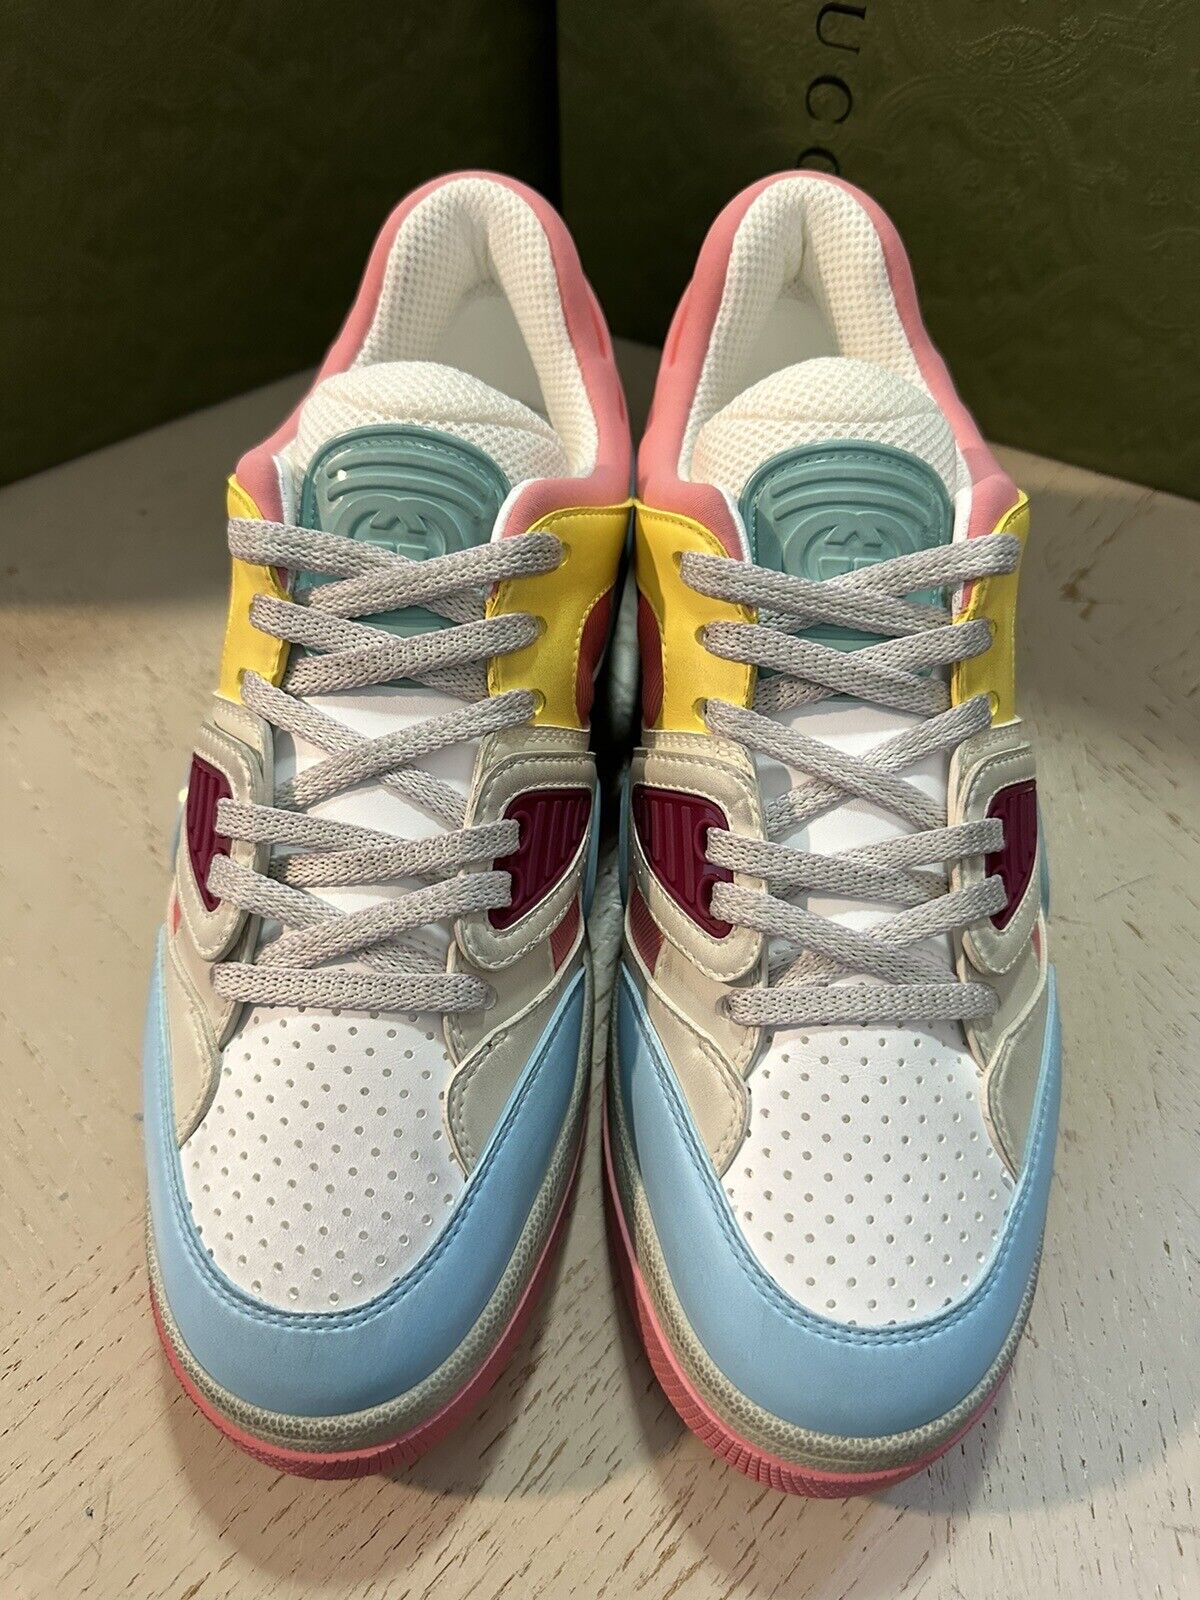 New $950 Gucci Woman Demetra Basket Sneakers Pink/Blue/Multi 8 US/38 Eu 700291